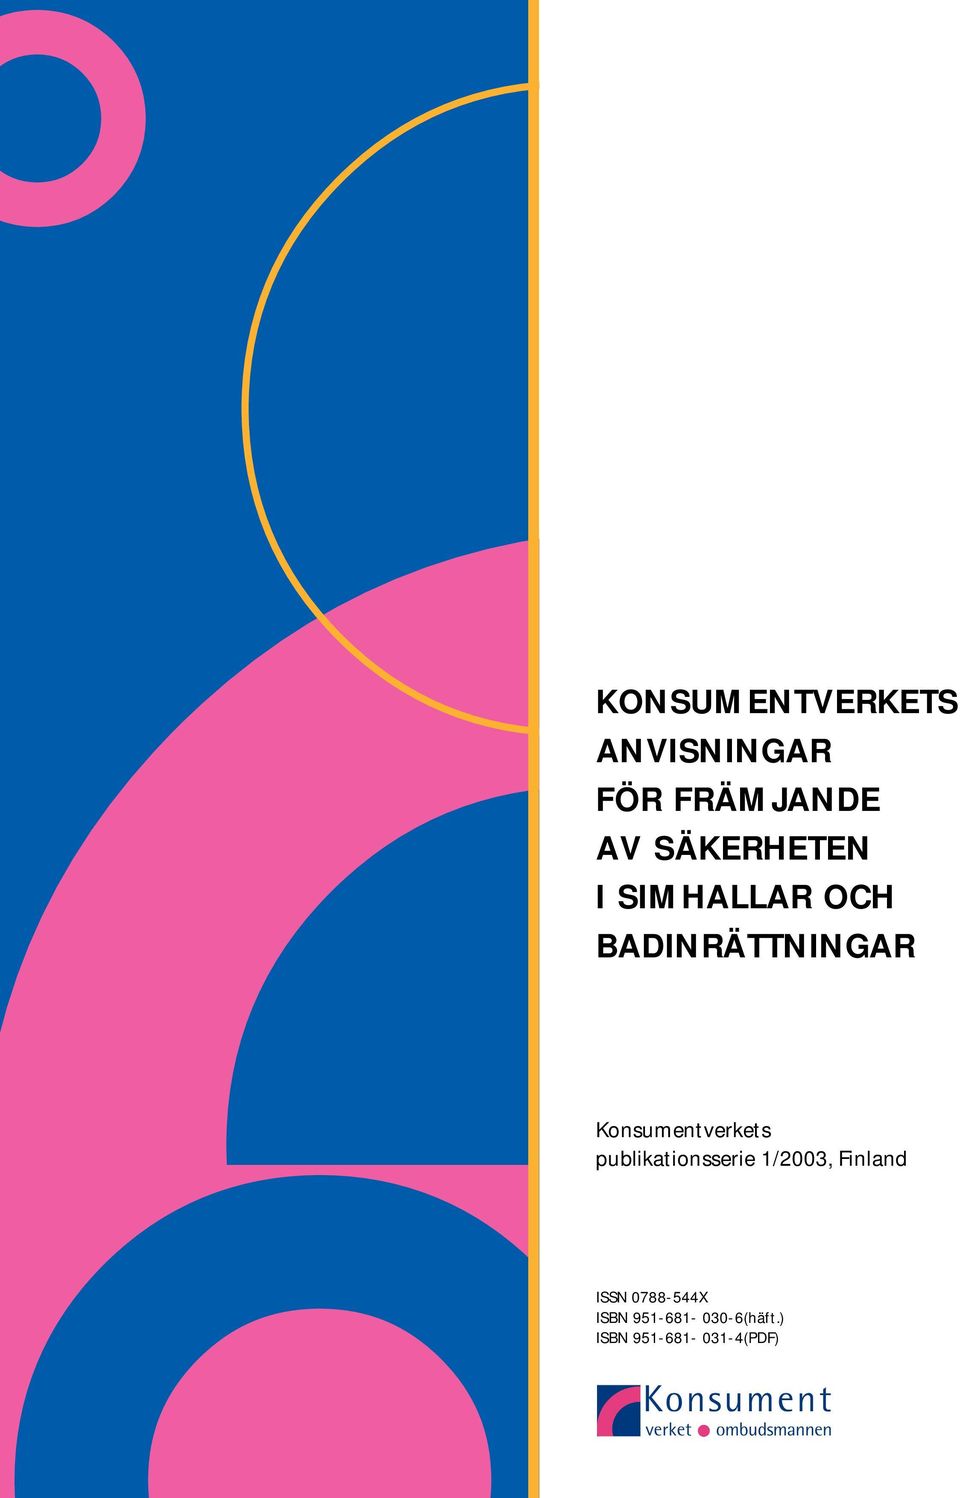 Konsumentverkets publikationsserie 1/2003, Finland